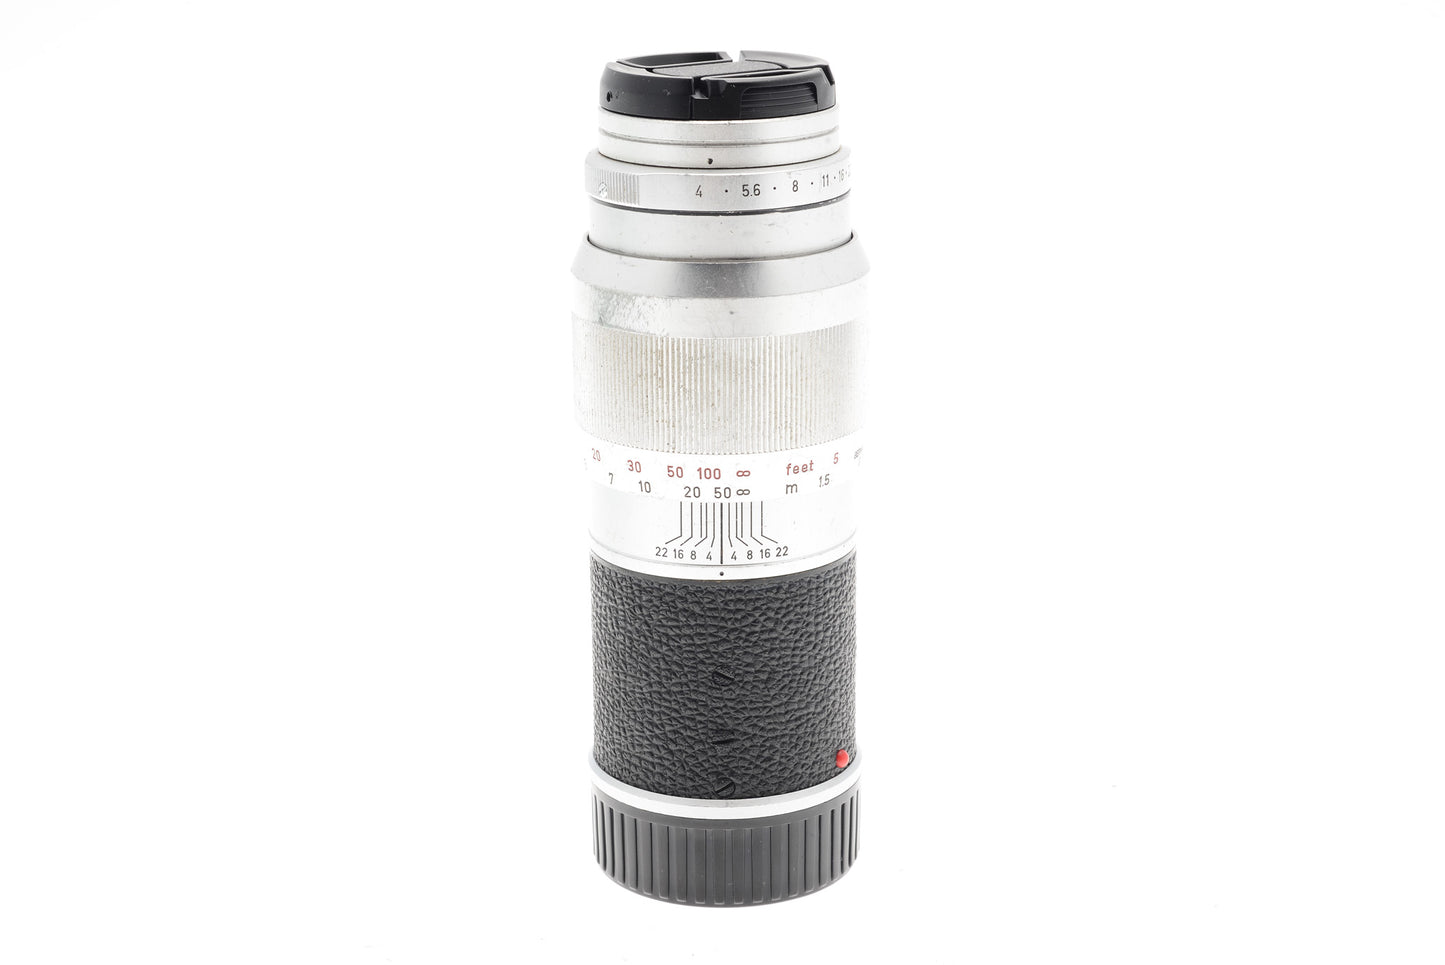 Leica 135mm f4 Elmar - Lens